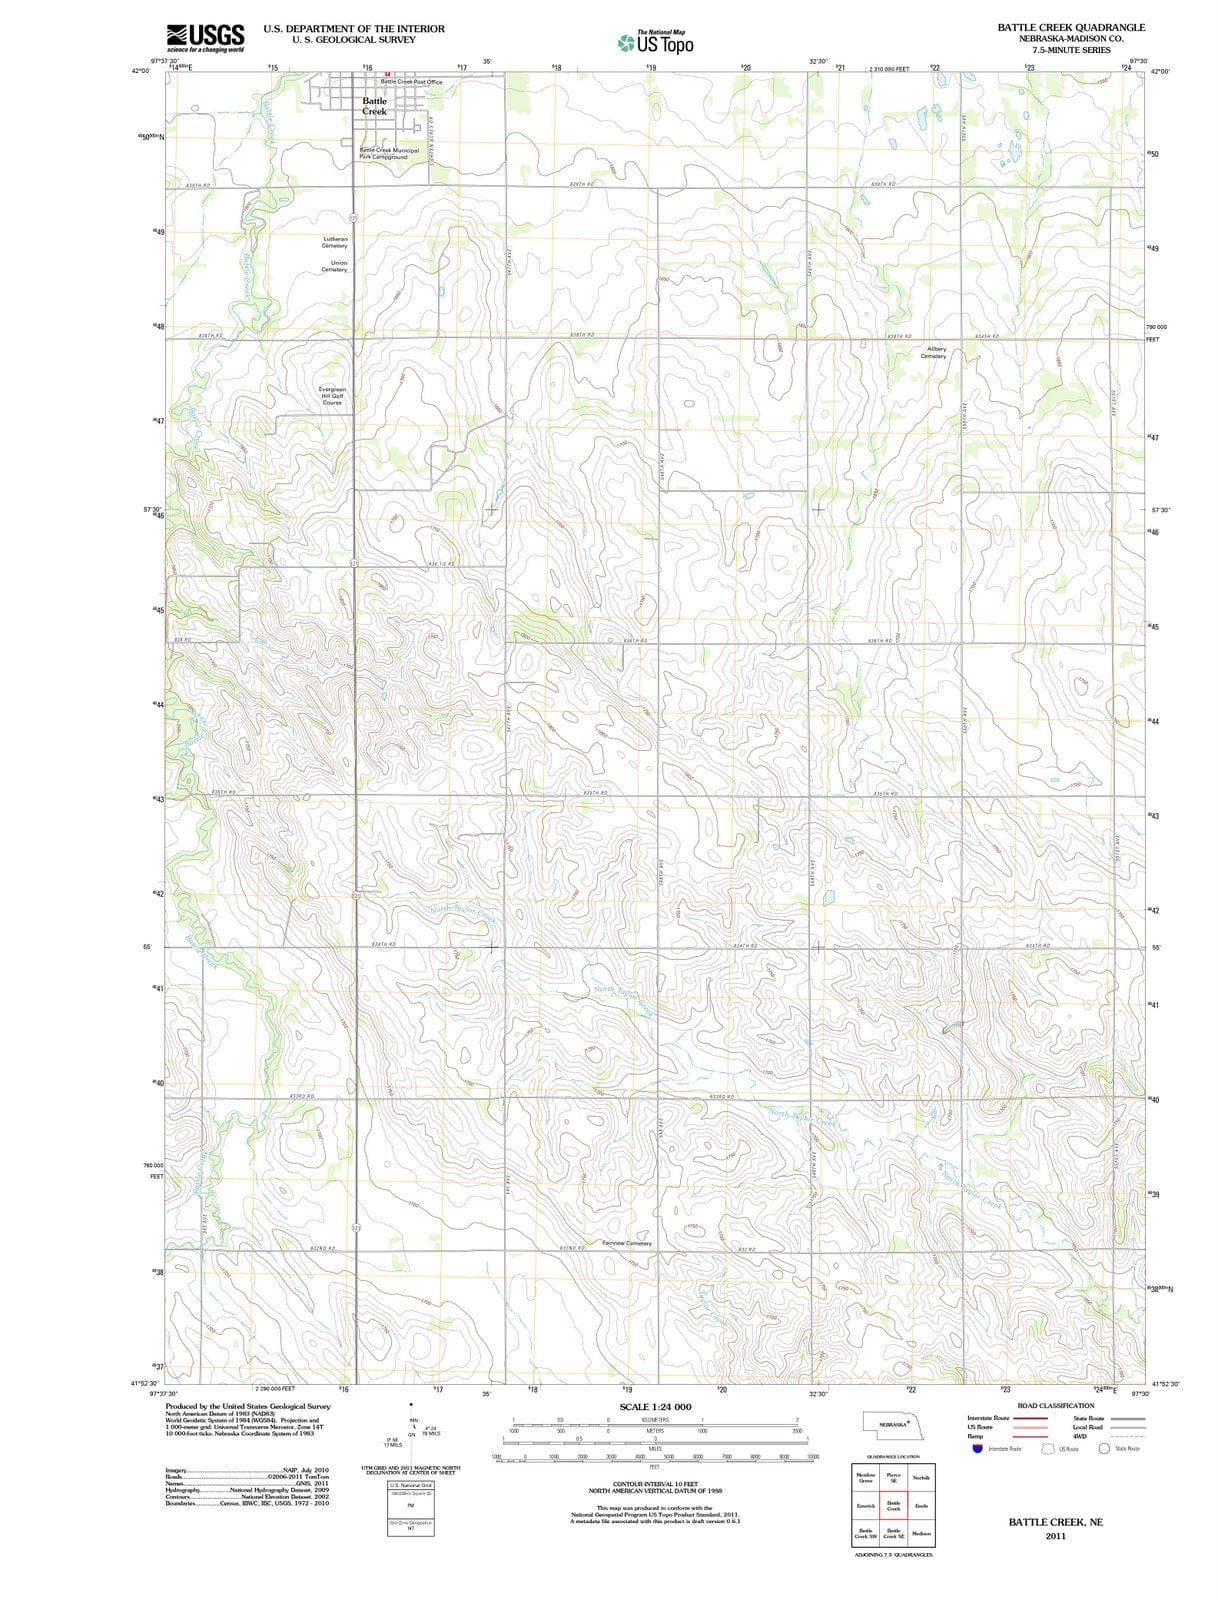 2011 Battle Creek, NE - Nebraska - USGS Topographic Map